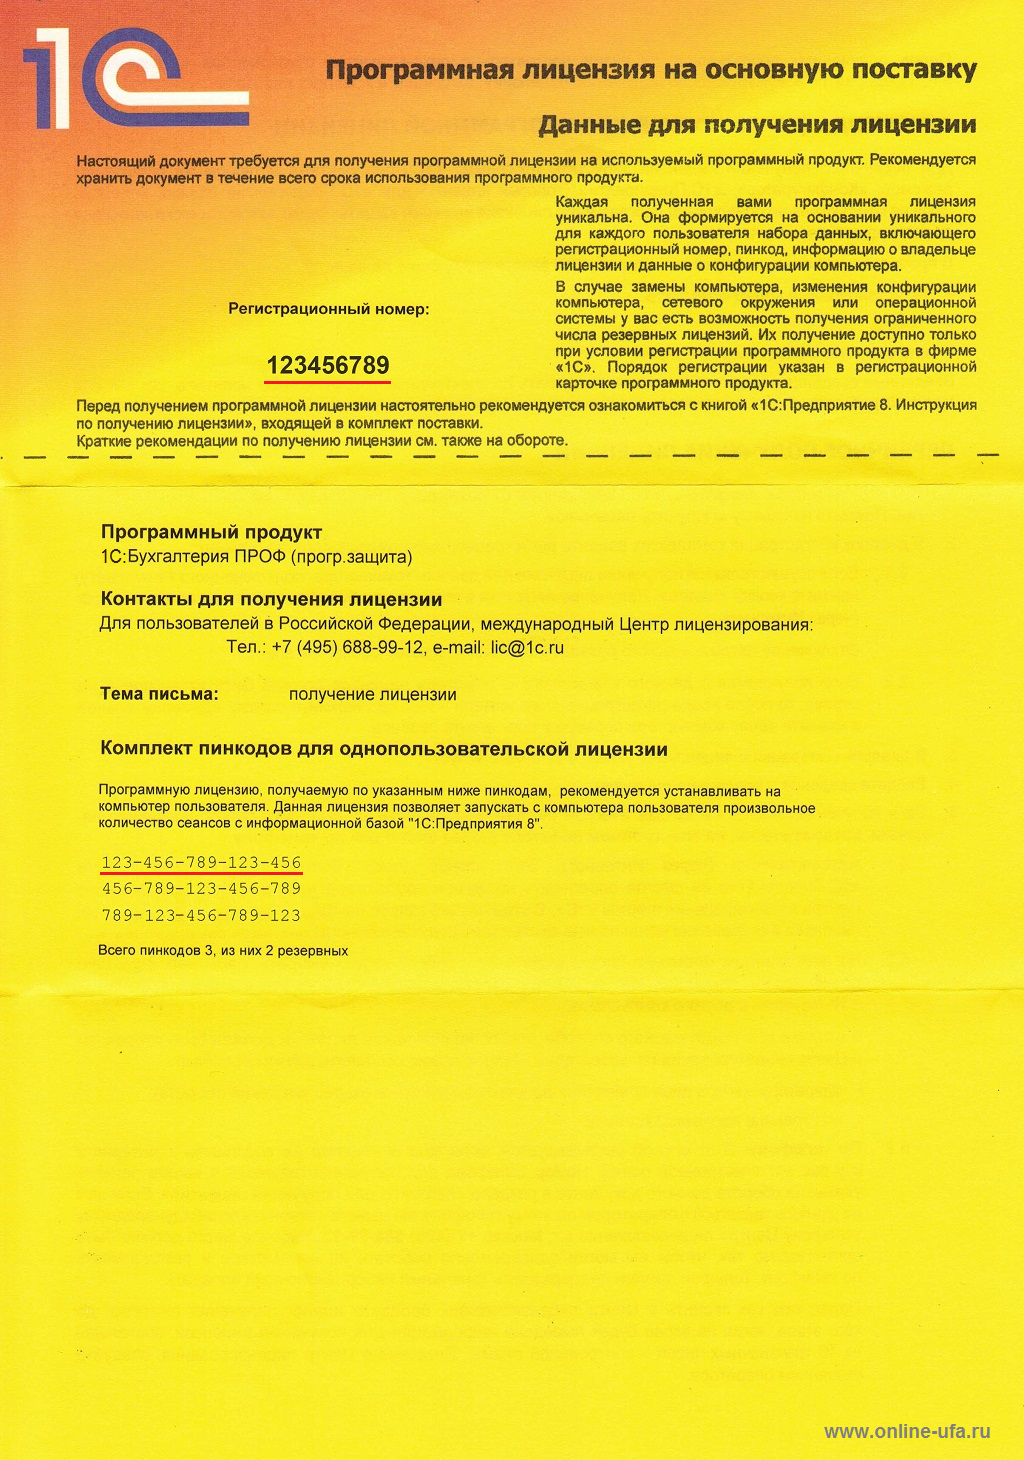 Комплект пинкодов для получения программной лицензии 1С:Предприятие 8 на бумажном носителе формата А4